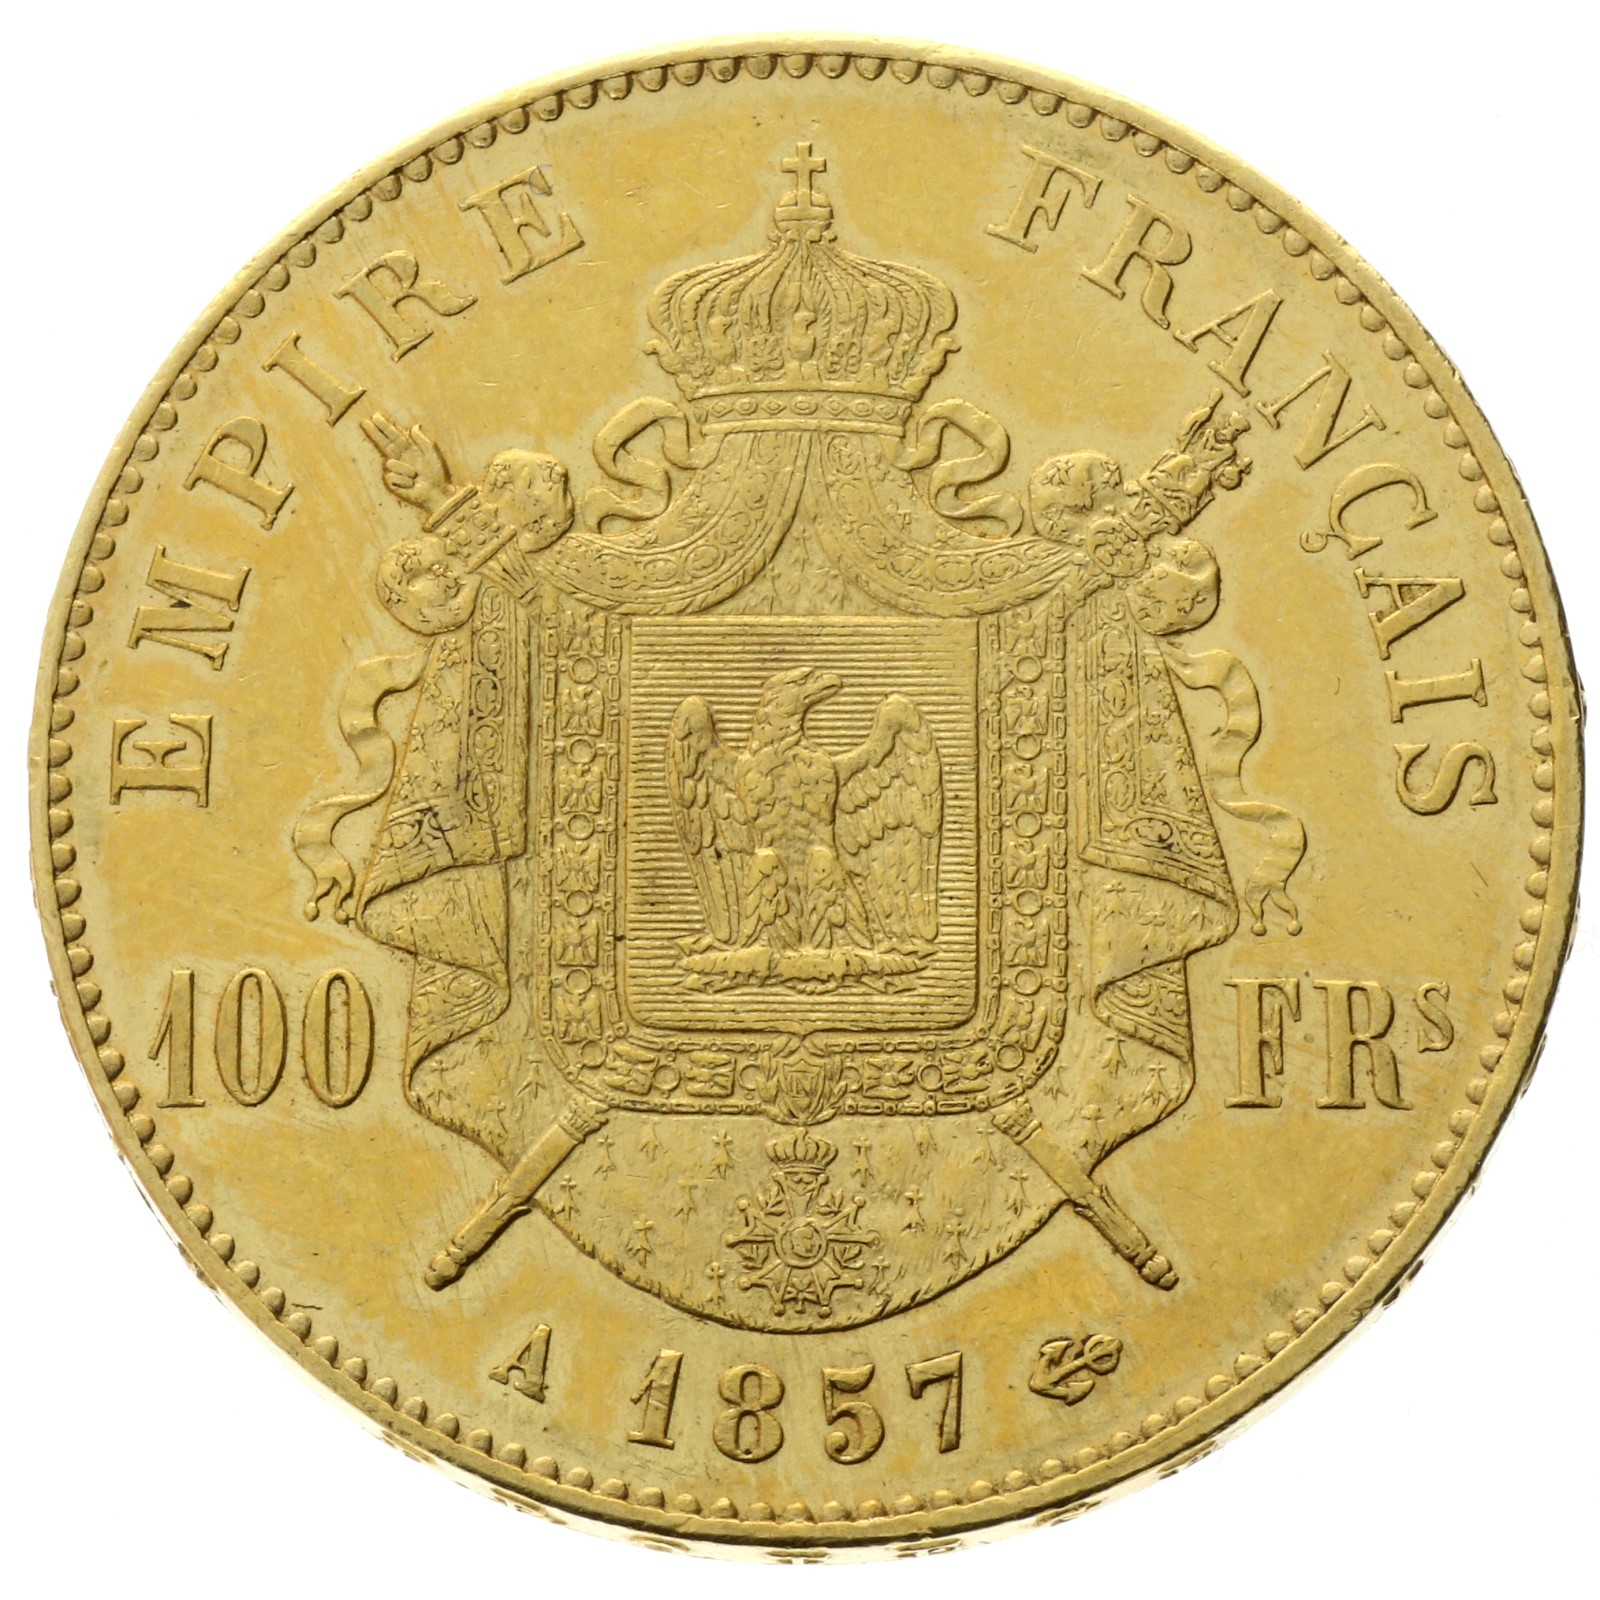 France - 100 Francs - 1857 - A - Napoléon III